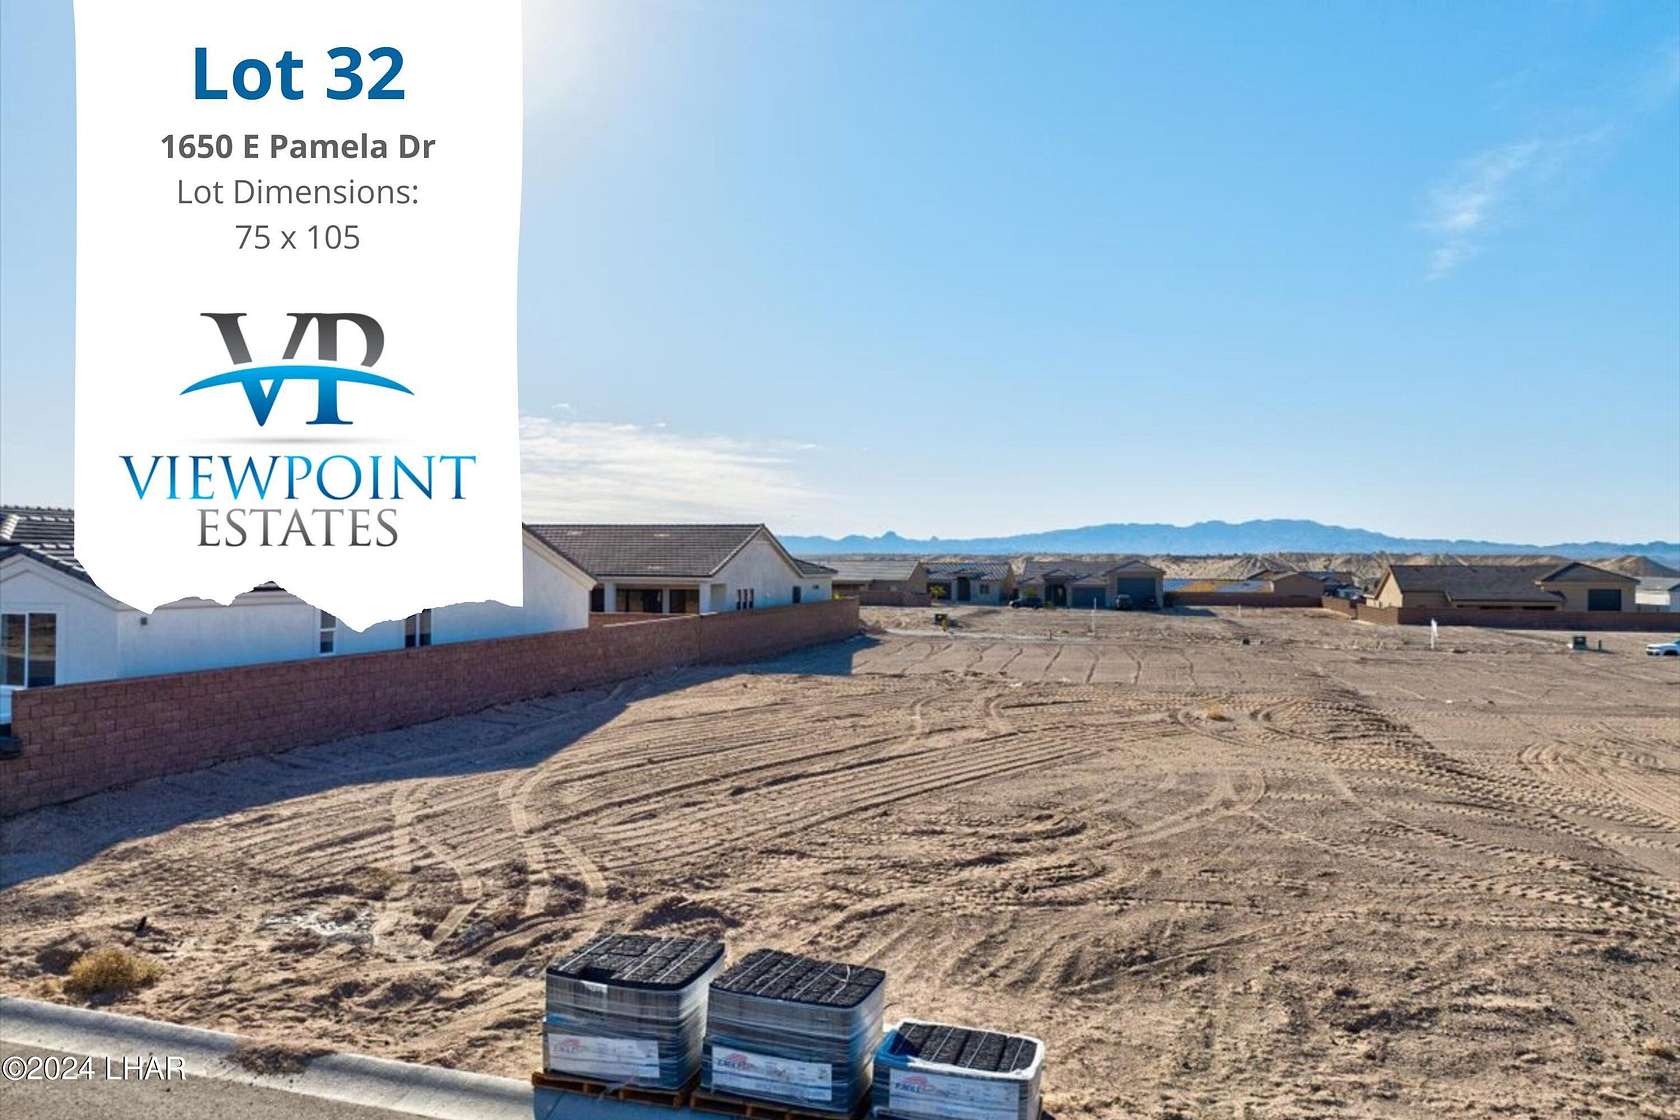 0.18 Acres of Residential Land for Sale in Lake Havasu City, Arizona